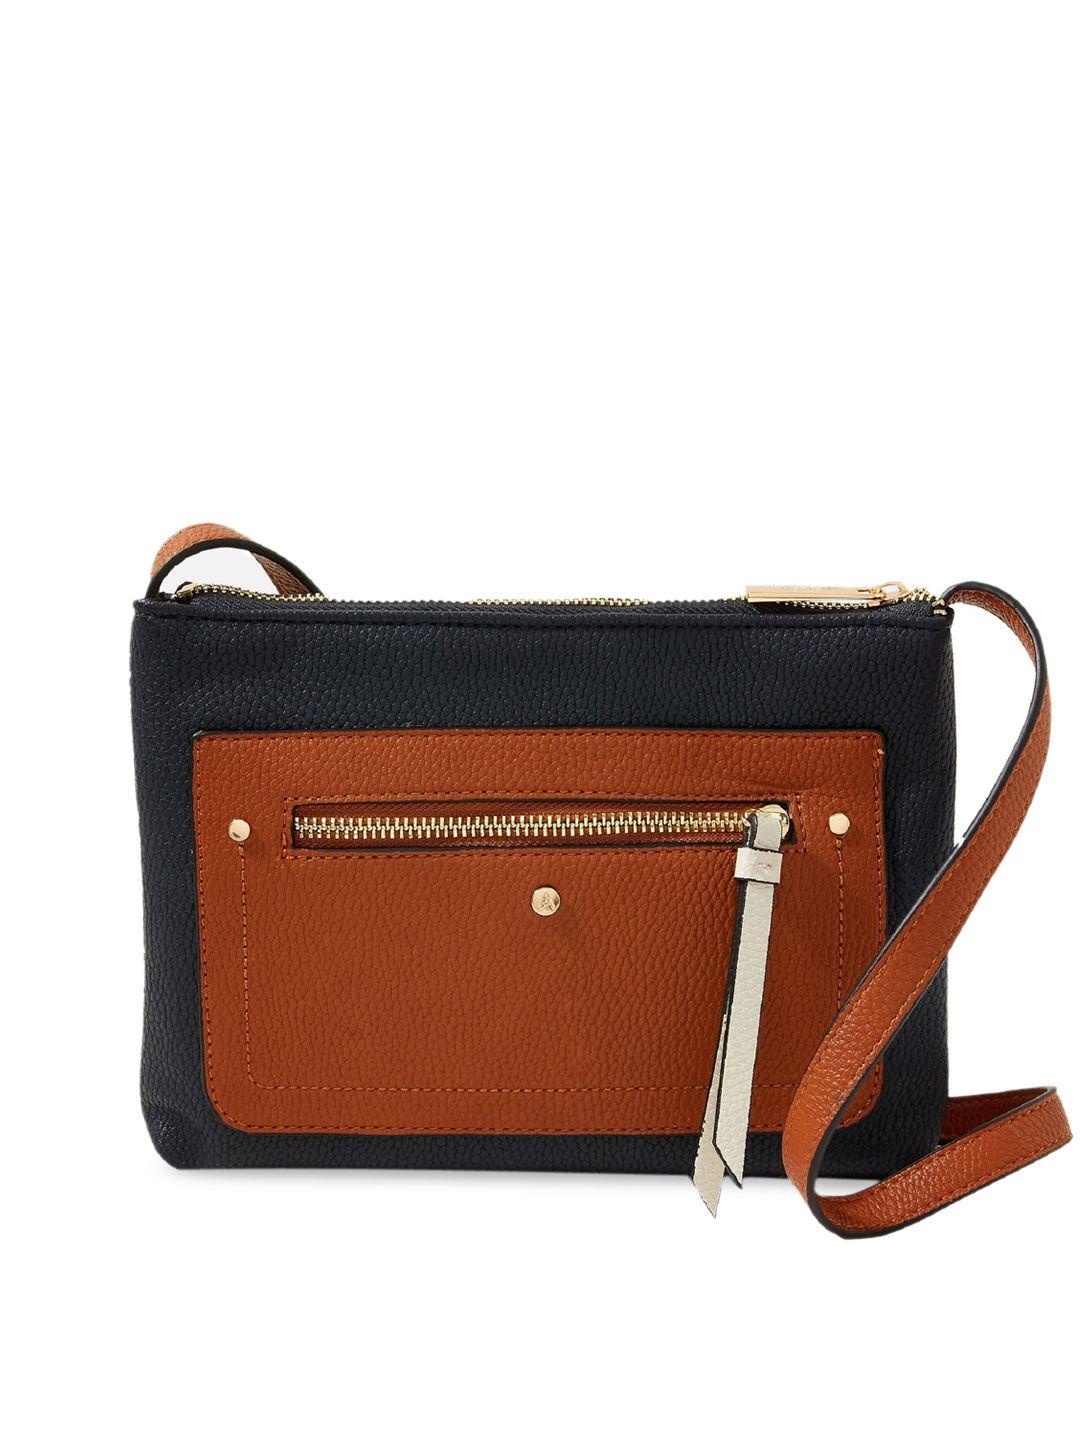 accessorize black & brown colourblocked sling bag